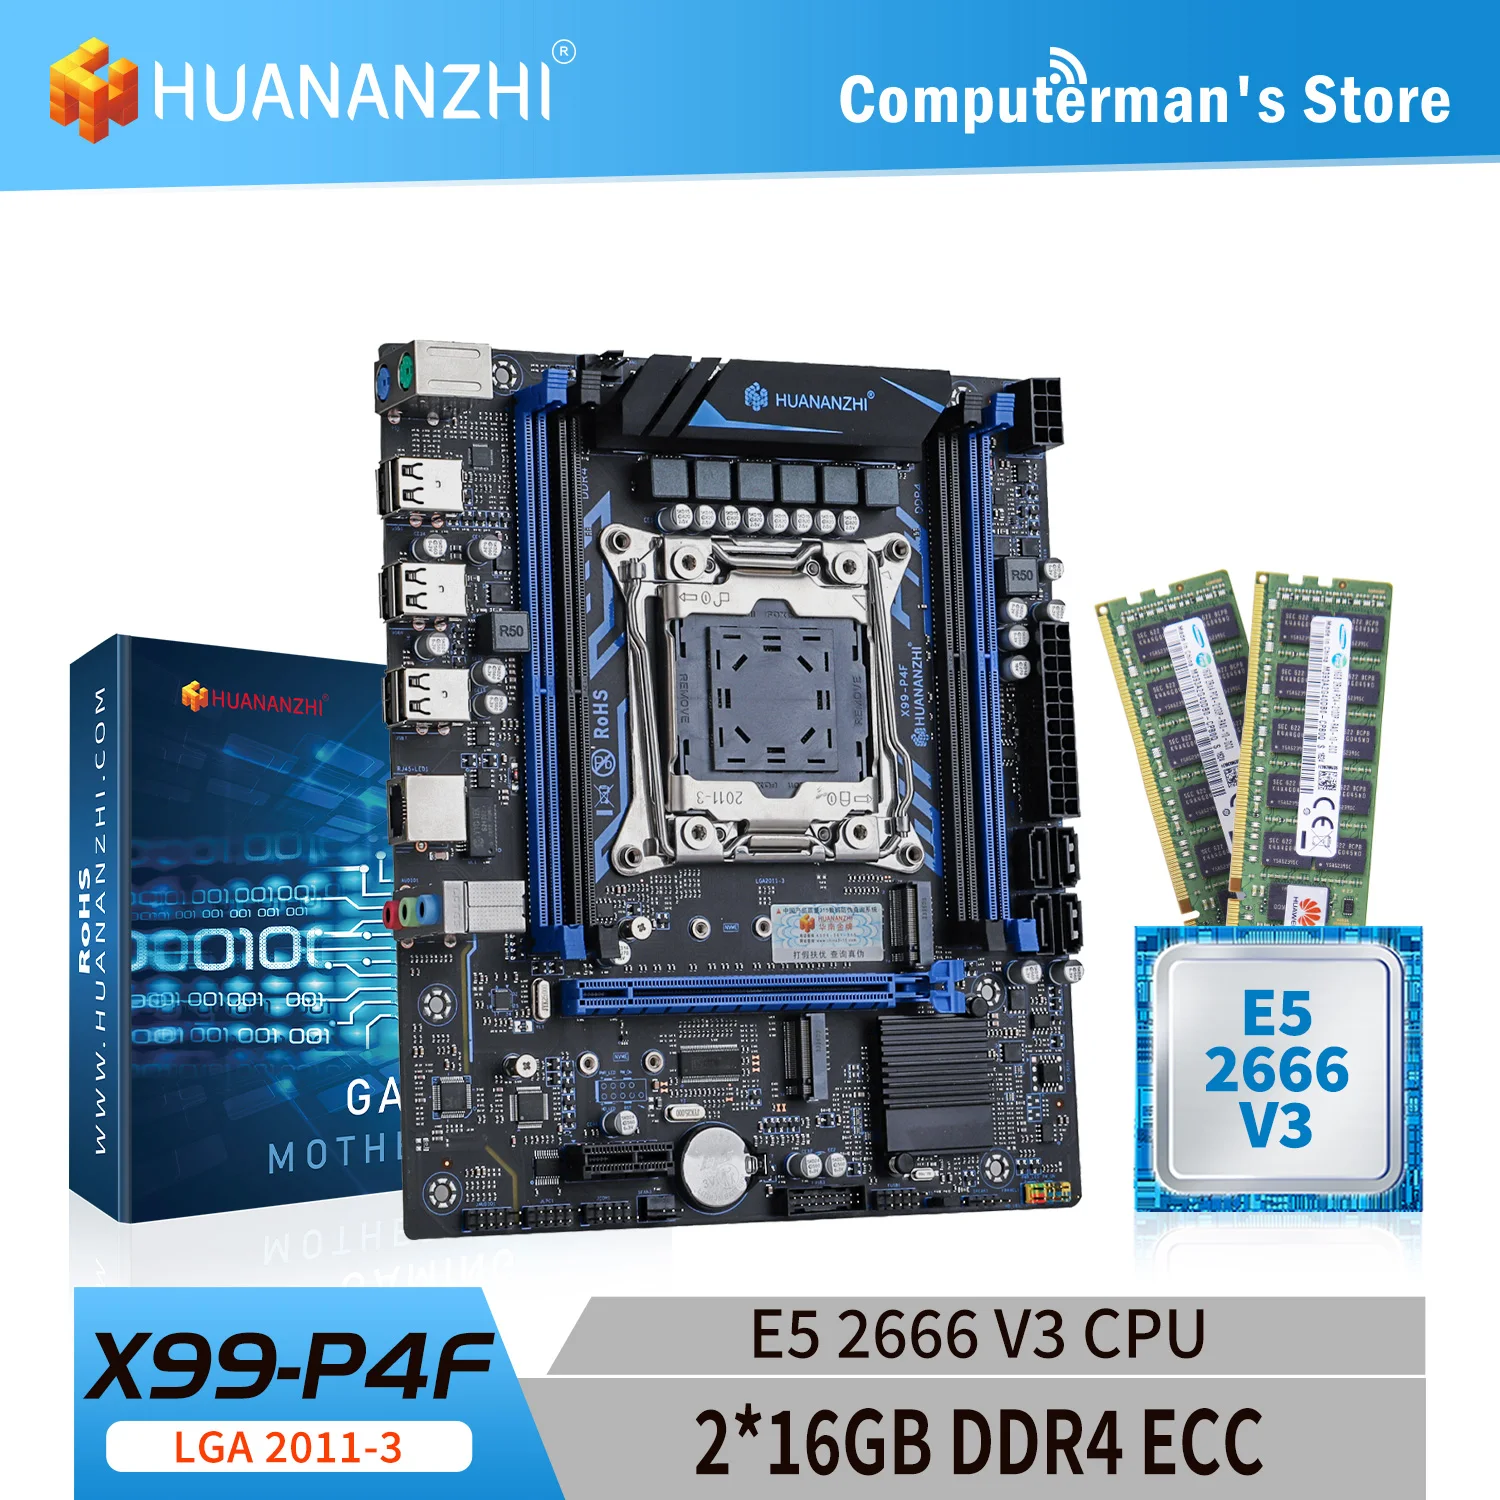 

HUANANZHI X99 P4F LGA 2011-3 XEON X99 Motherboard with Intel E5 2666 V3 with 2*16G DDR4 RECC Memory Combo Kit Set NVME